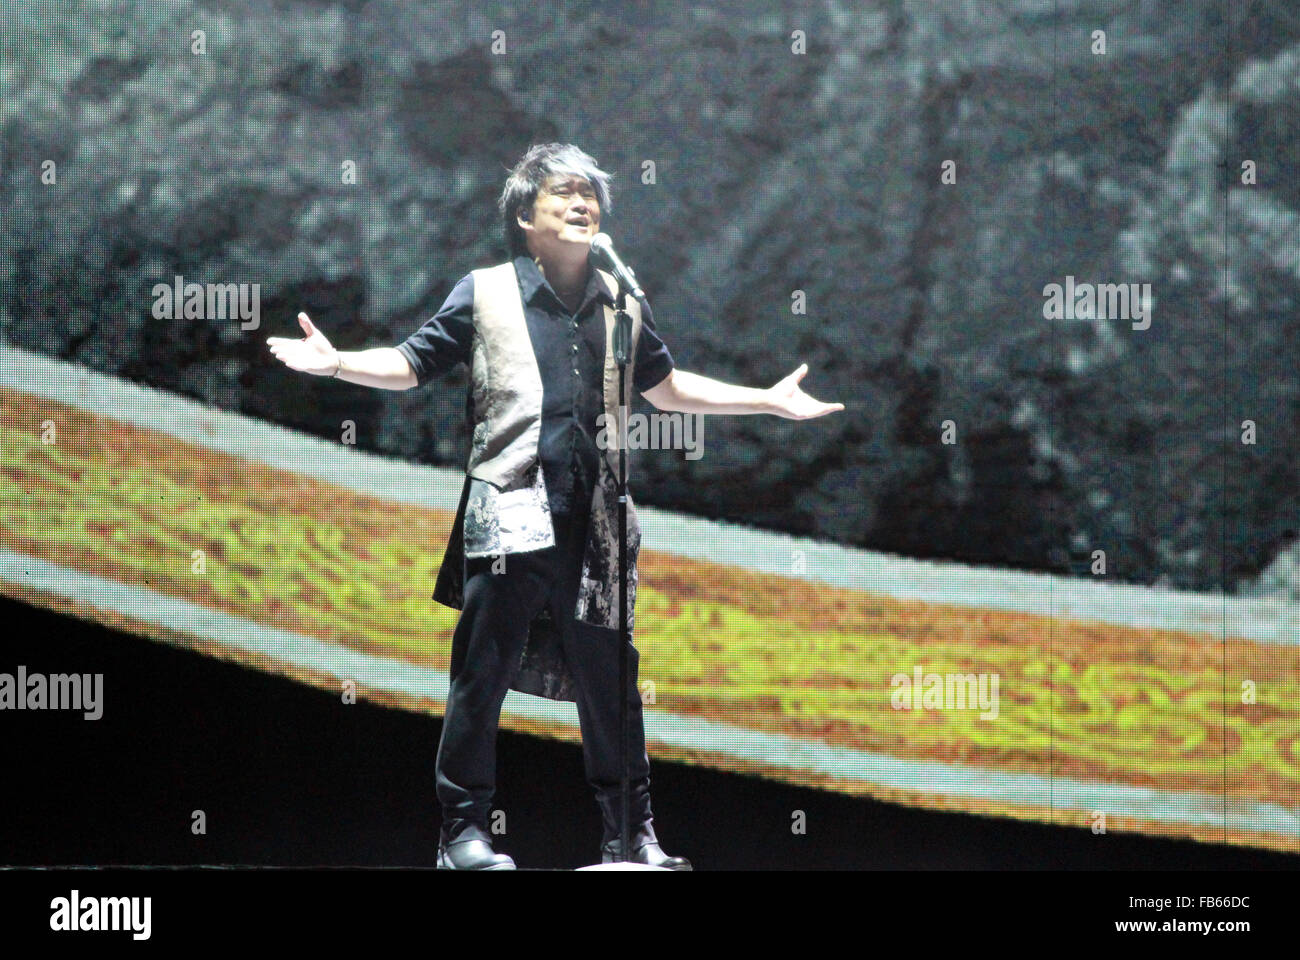 Nanjing, Jiangsu Province de la Chine. Jan 9, 2016. Singer Emil Wakin Chau effectue durant son concert à Nanjing, capitale de la province de Jiangsu, Chine orientale, le 9 janvier 2016. © Wang Qiming/Xinhua/Alamy Live News Banque D'Images